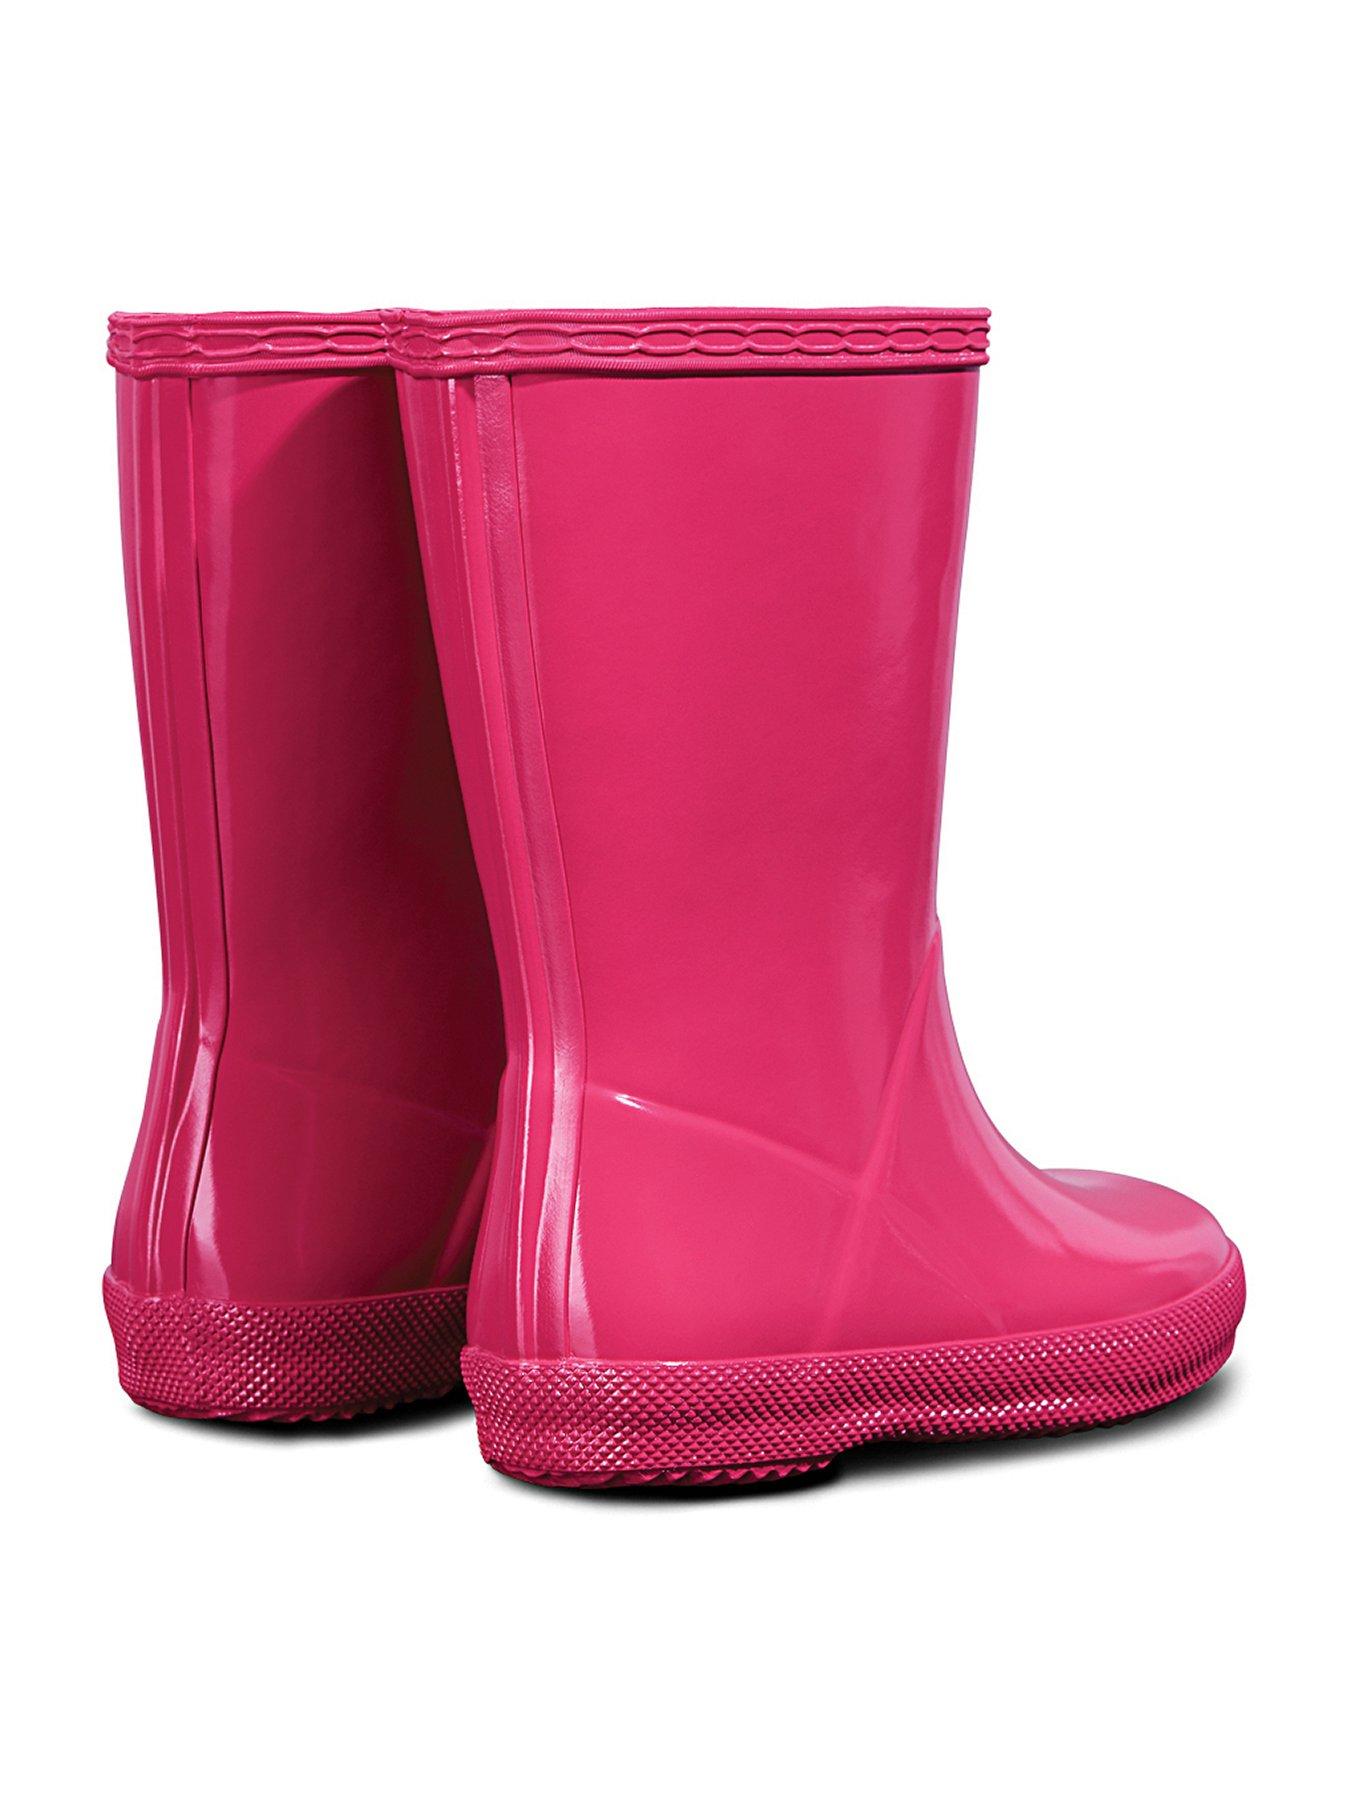 Kids Original Infant First Classic Gloss Wellington Boots - Bright Pink